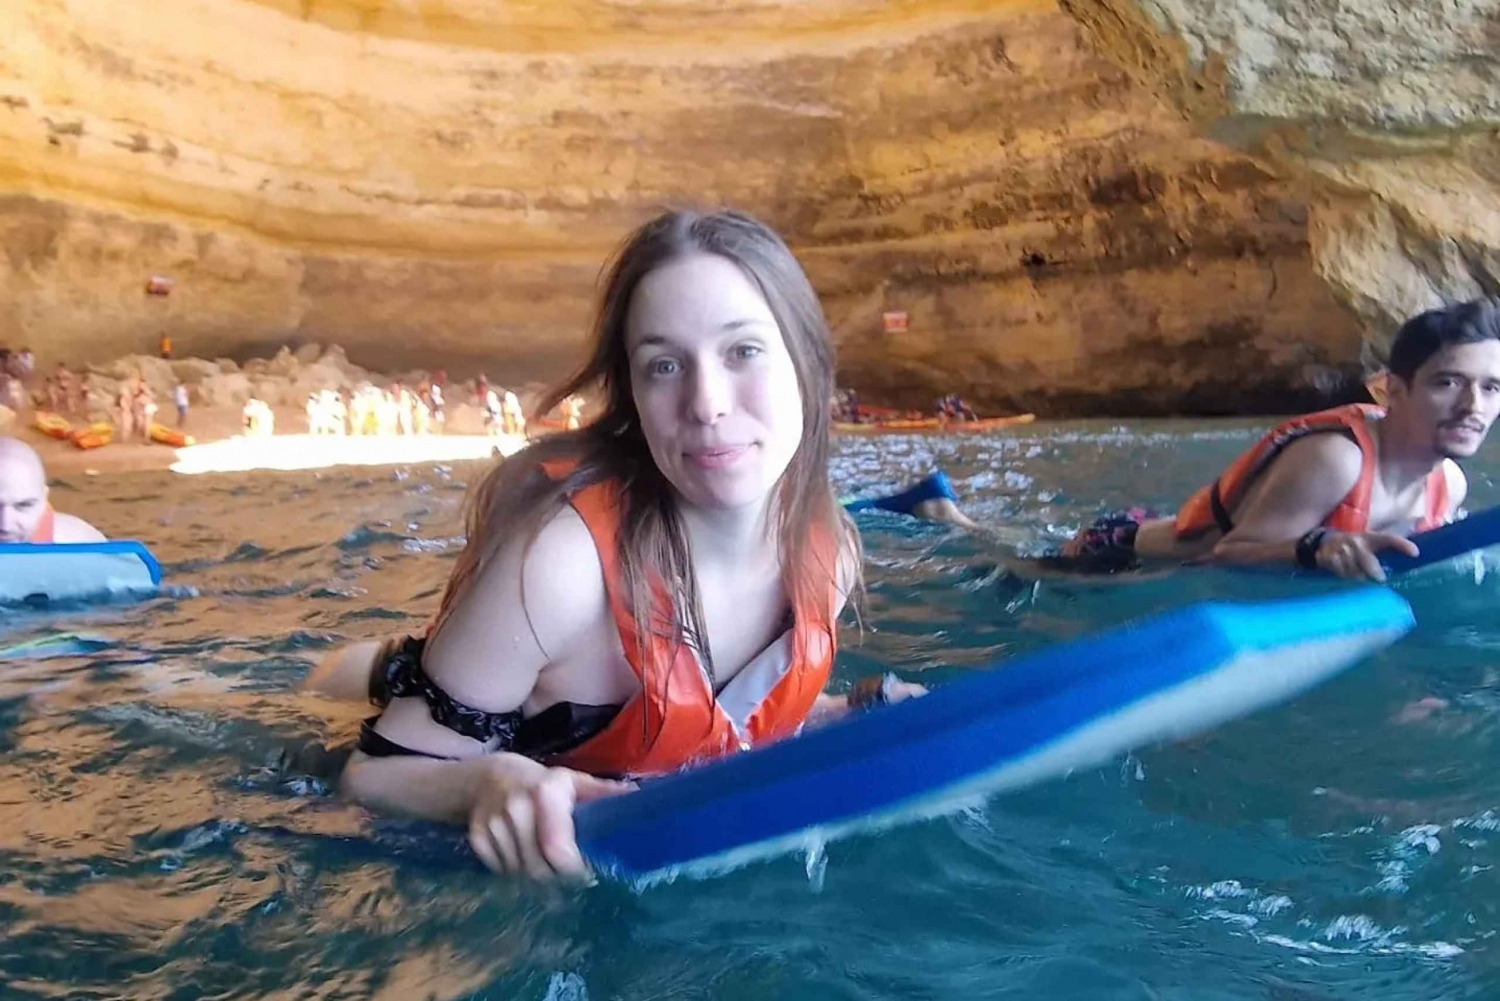 Private Express Tour at Benagil Cave in Portugal